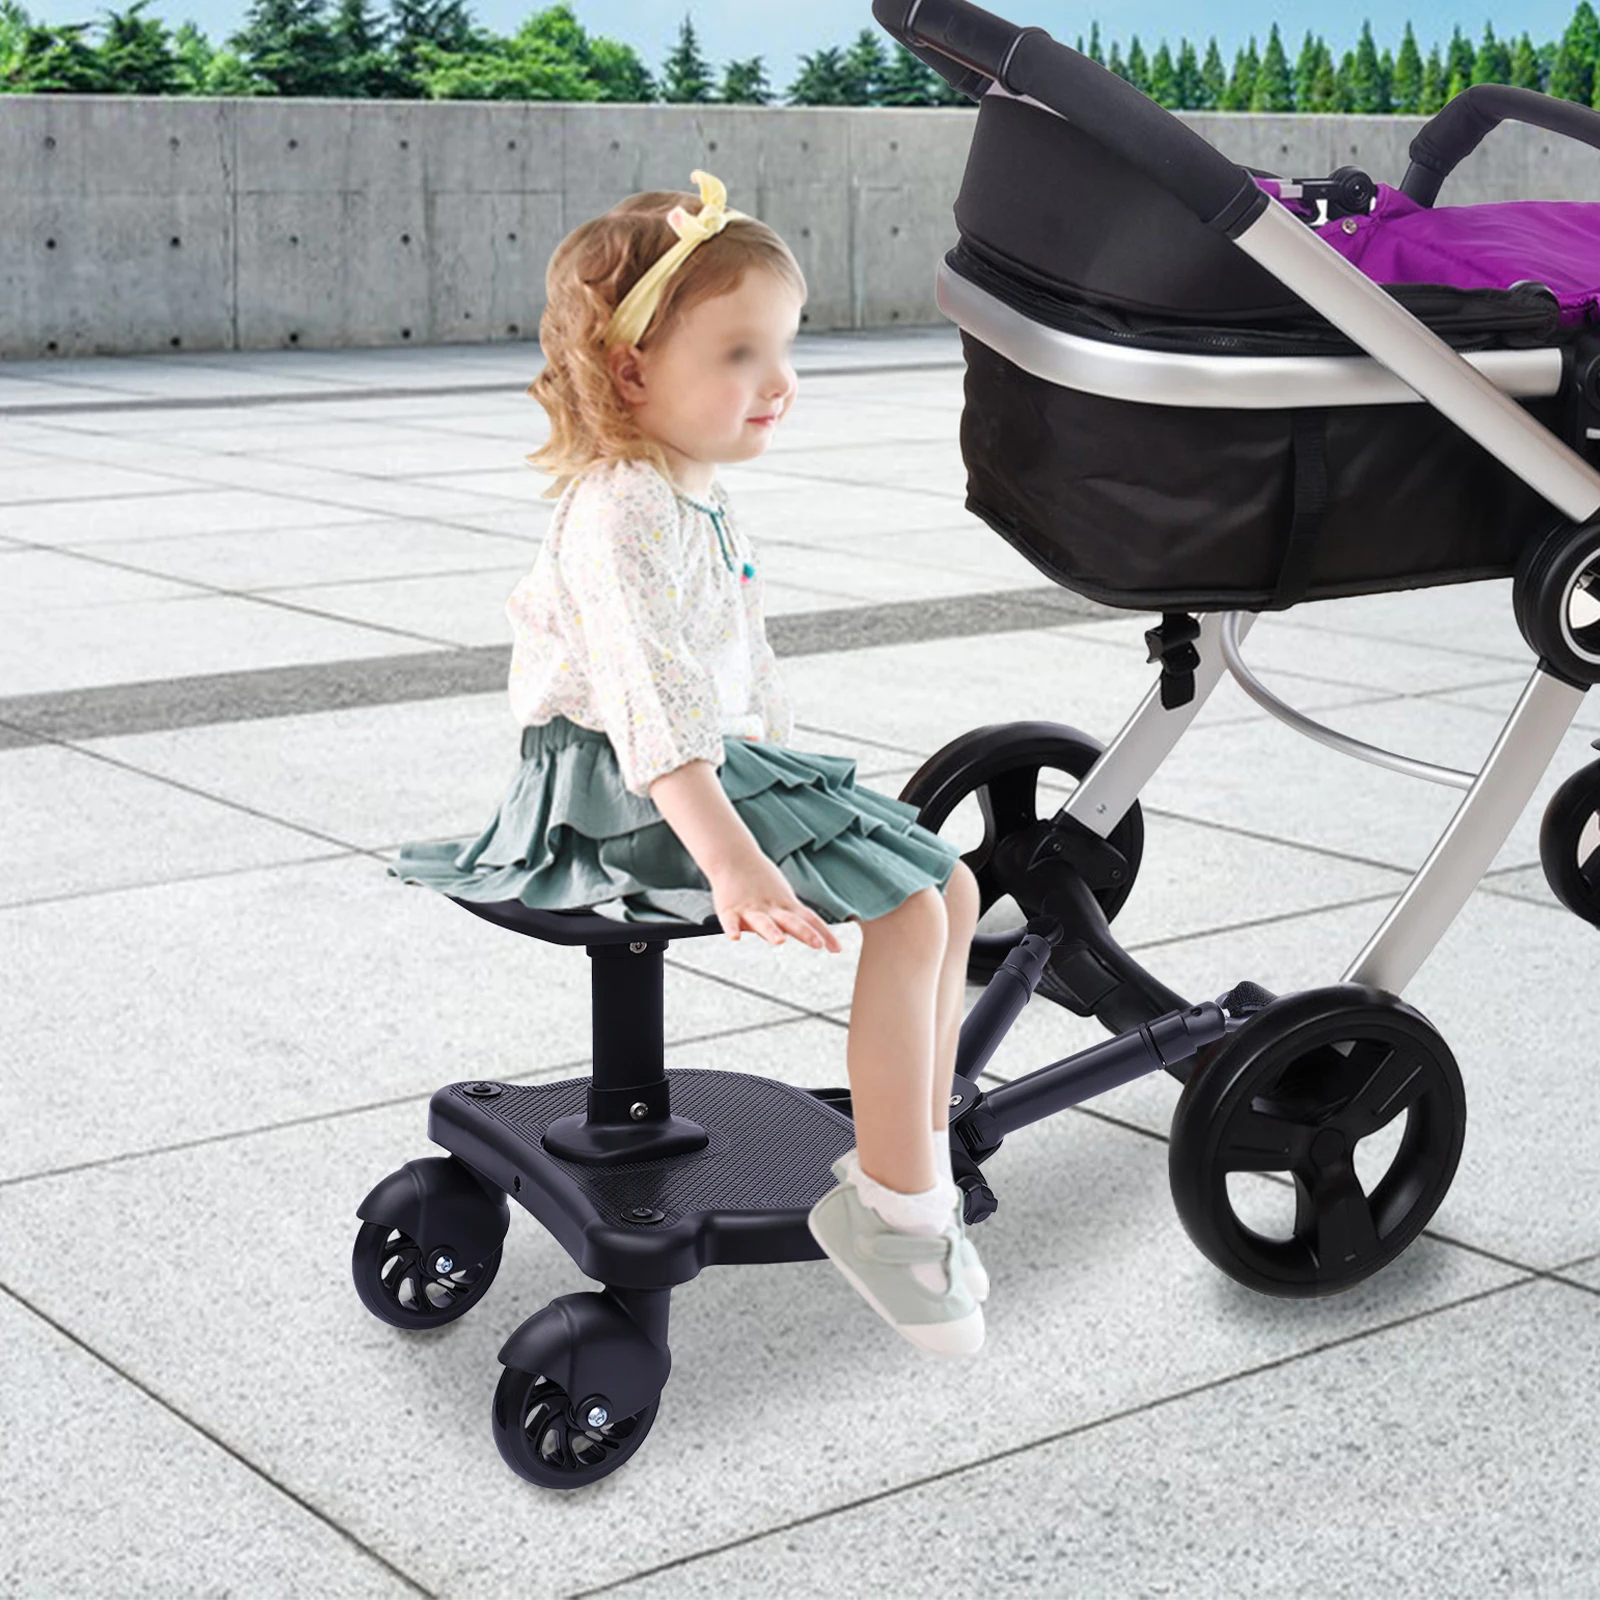 

Universal Baby Stroller Ride Board w/Detachable Seat 2 in 1 Stroller Glider Board Wheeled Ride Board Seat Pedal